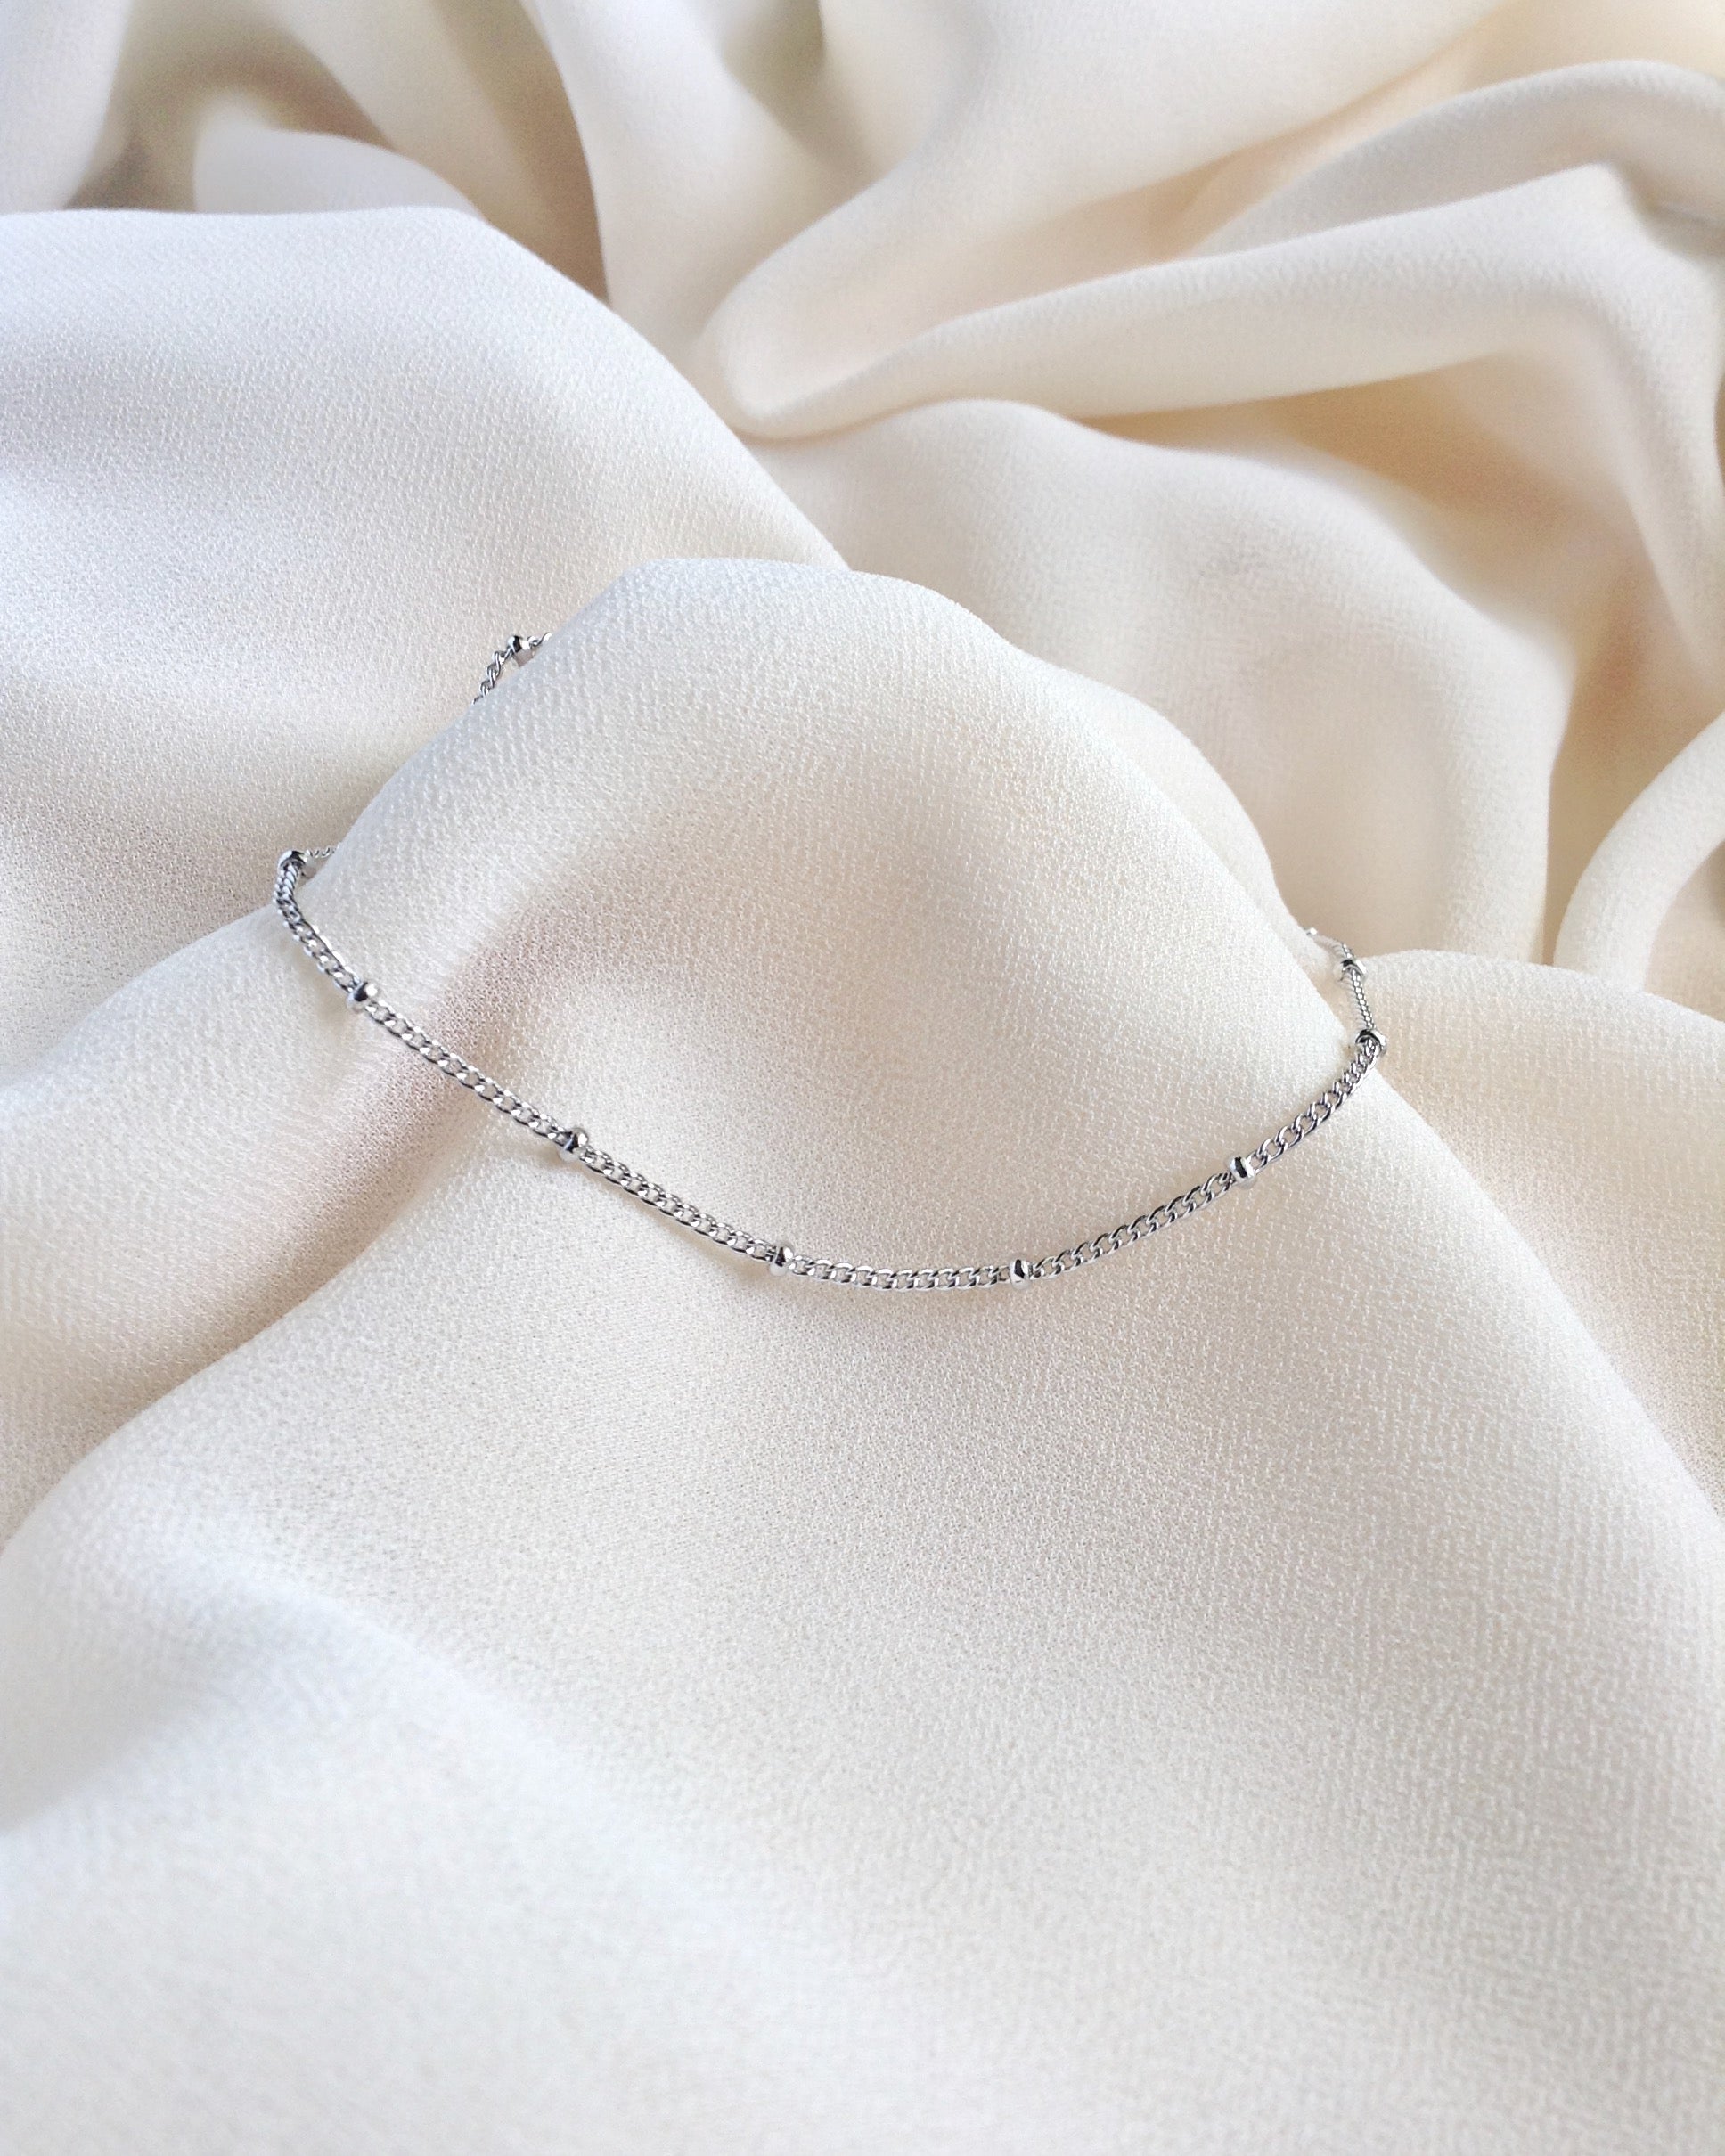 Simple Everyday Bracelet | Delicate Chain Bracelet | IB Jewelry